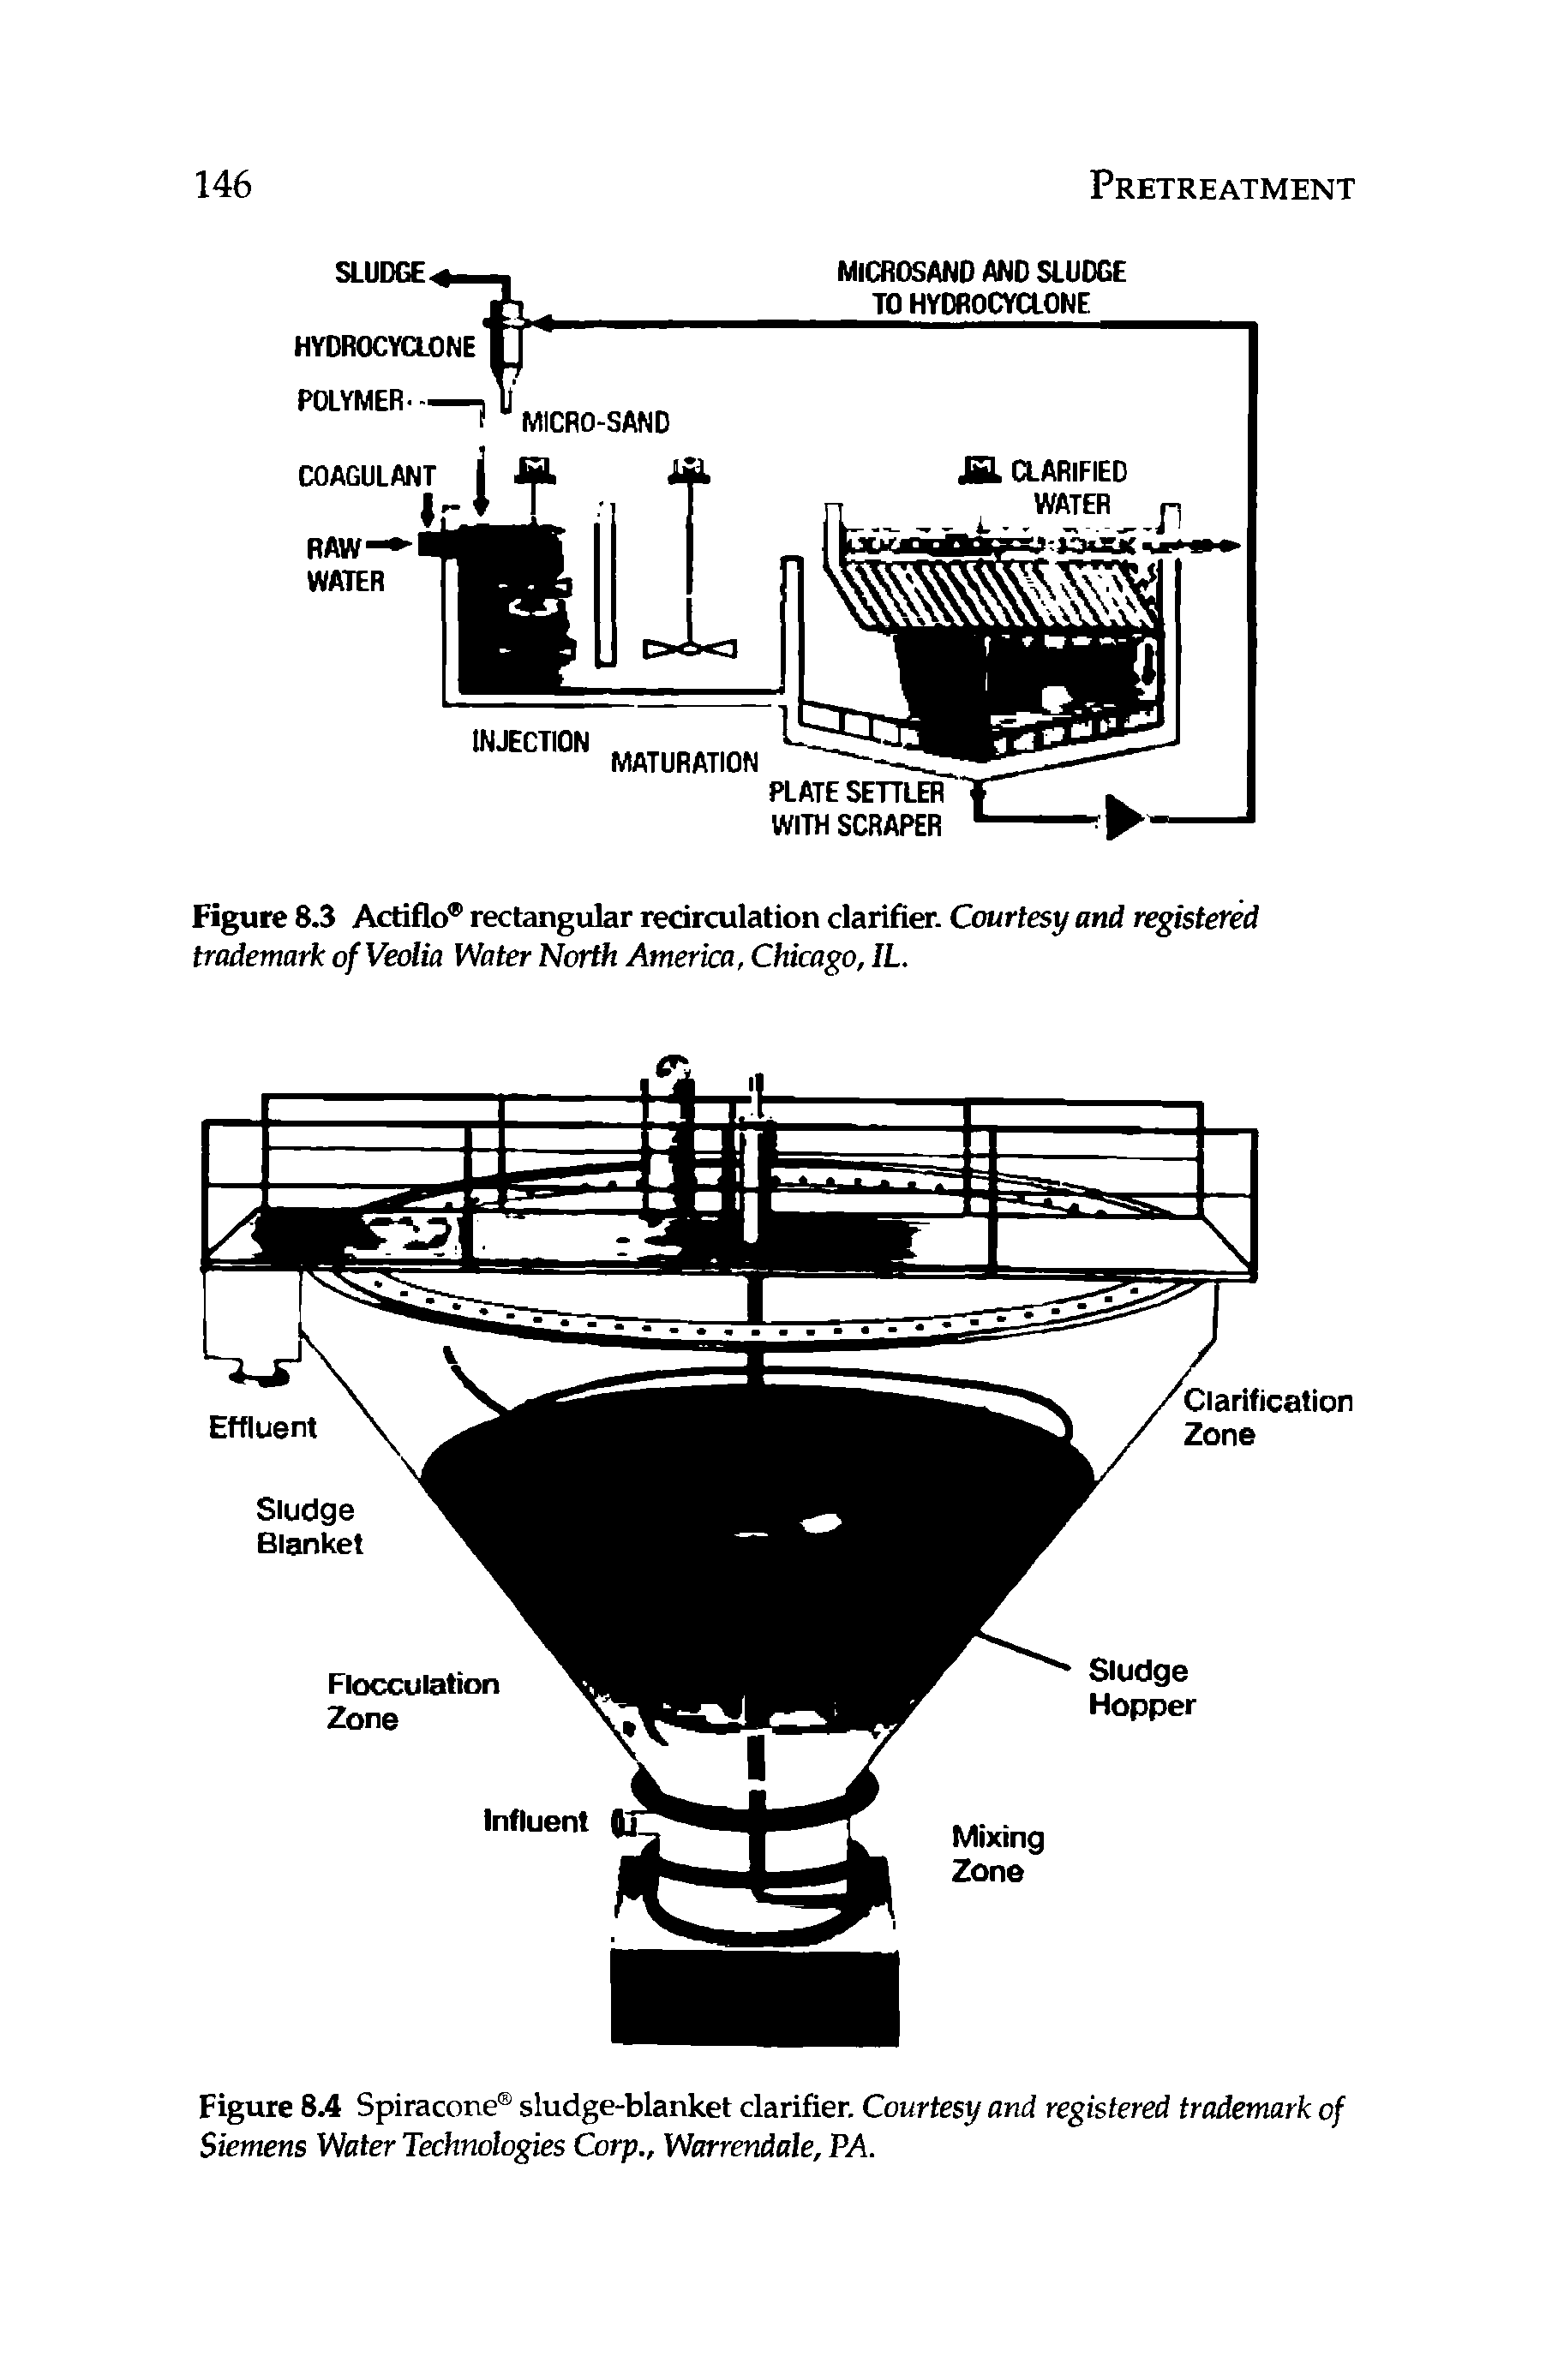 Figure 8.3 Actiflo rectangular recirculation clarifier. Courtesy and registered trademark ofVeolia Water North America, Chicago, JL.